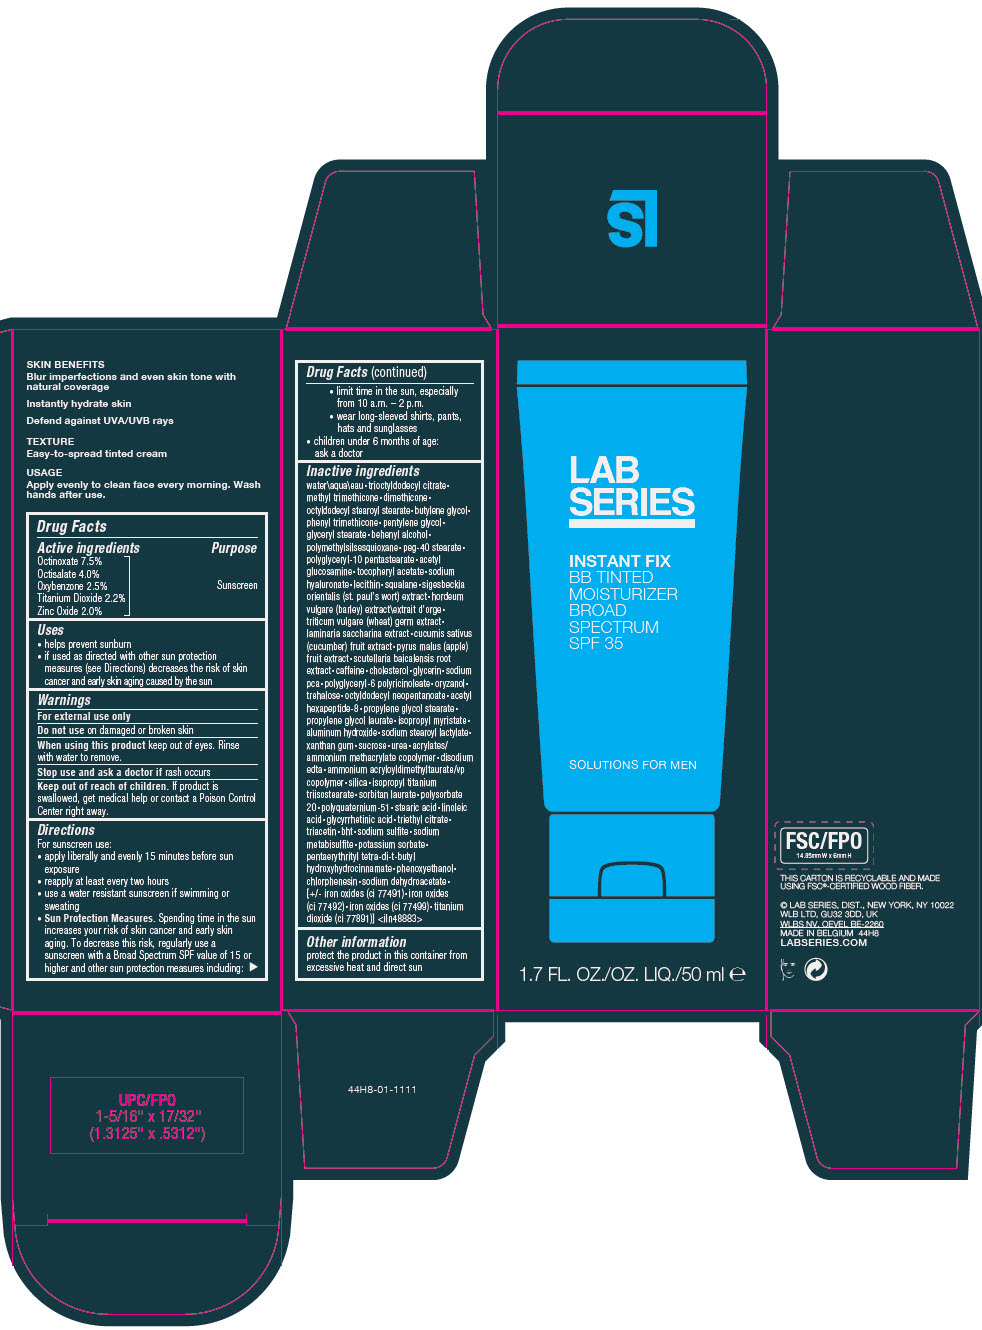 PRINCIPAL DISPLAY PANEL - 50 ml Bottle Carton